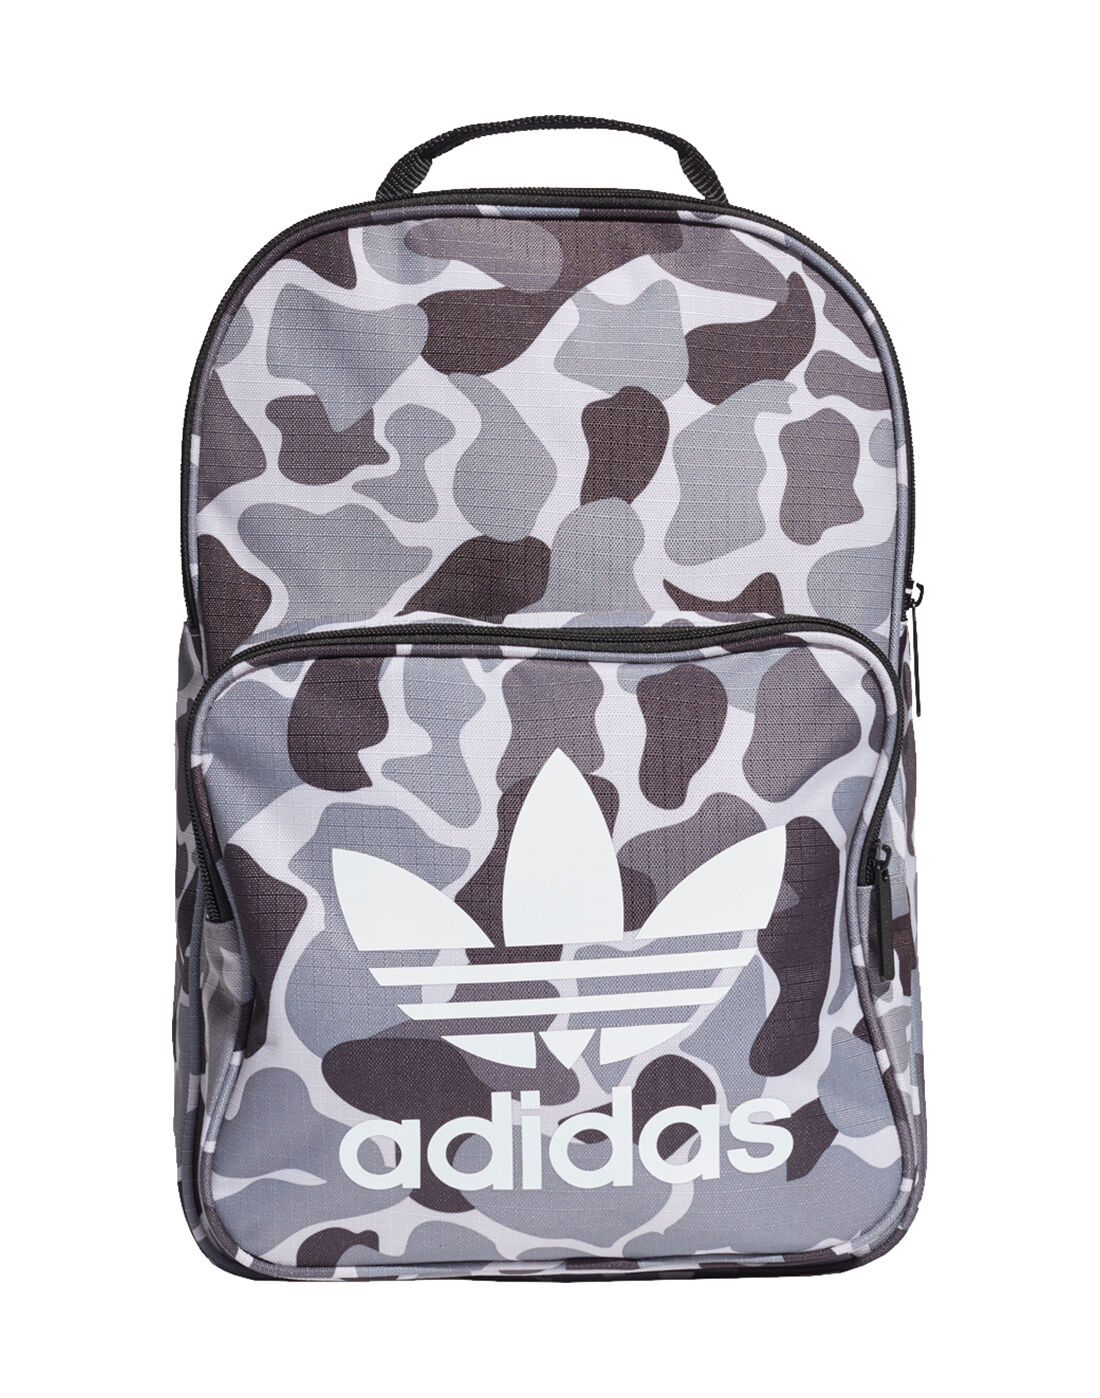 adidas camo classic backpack